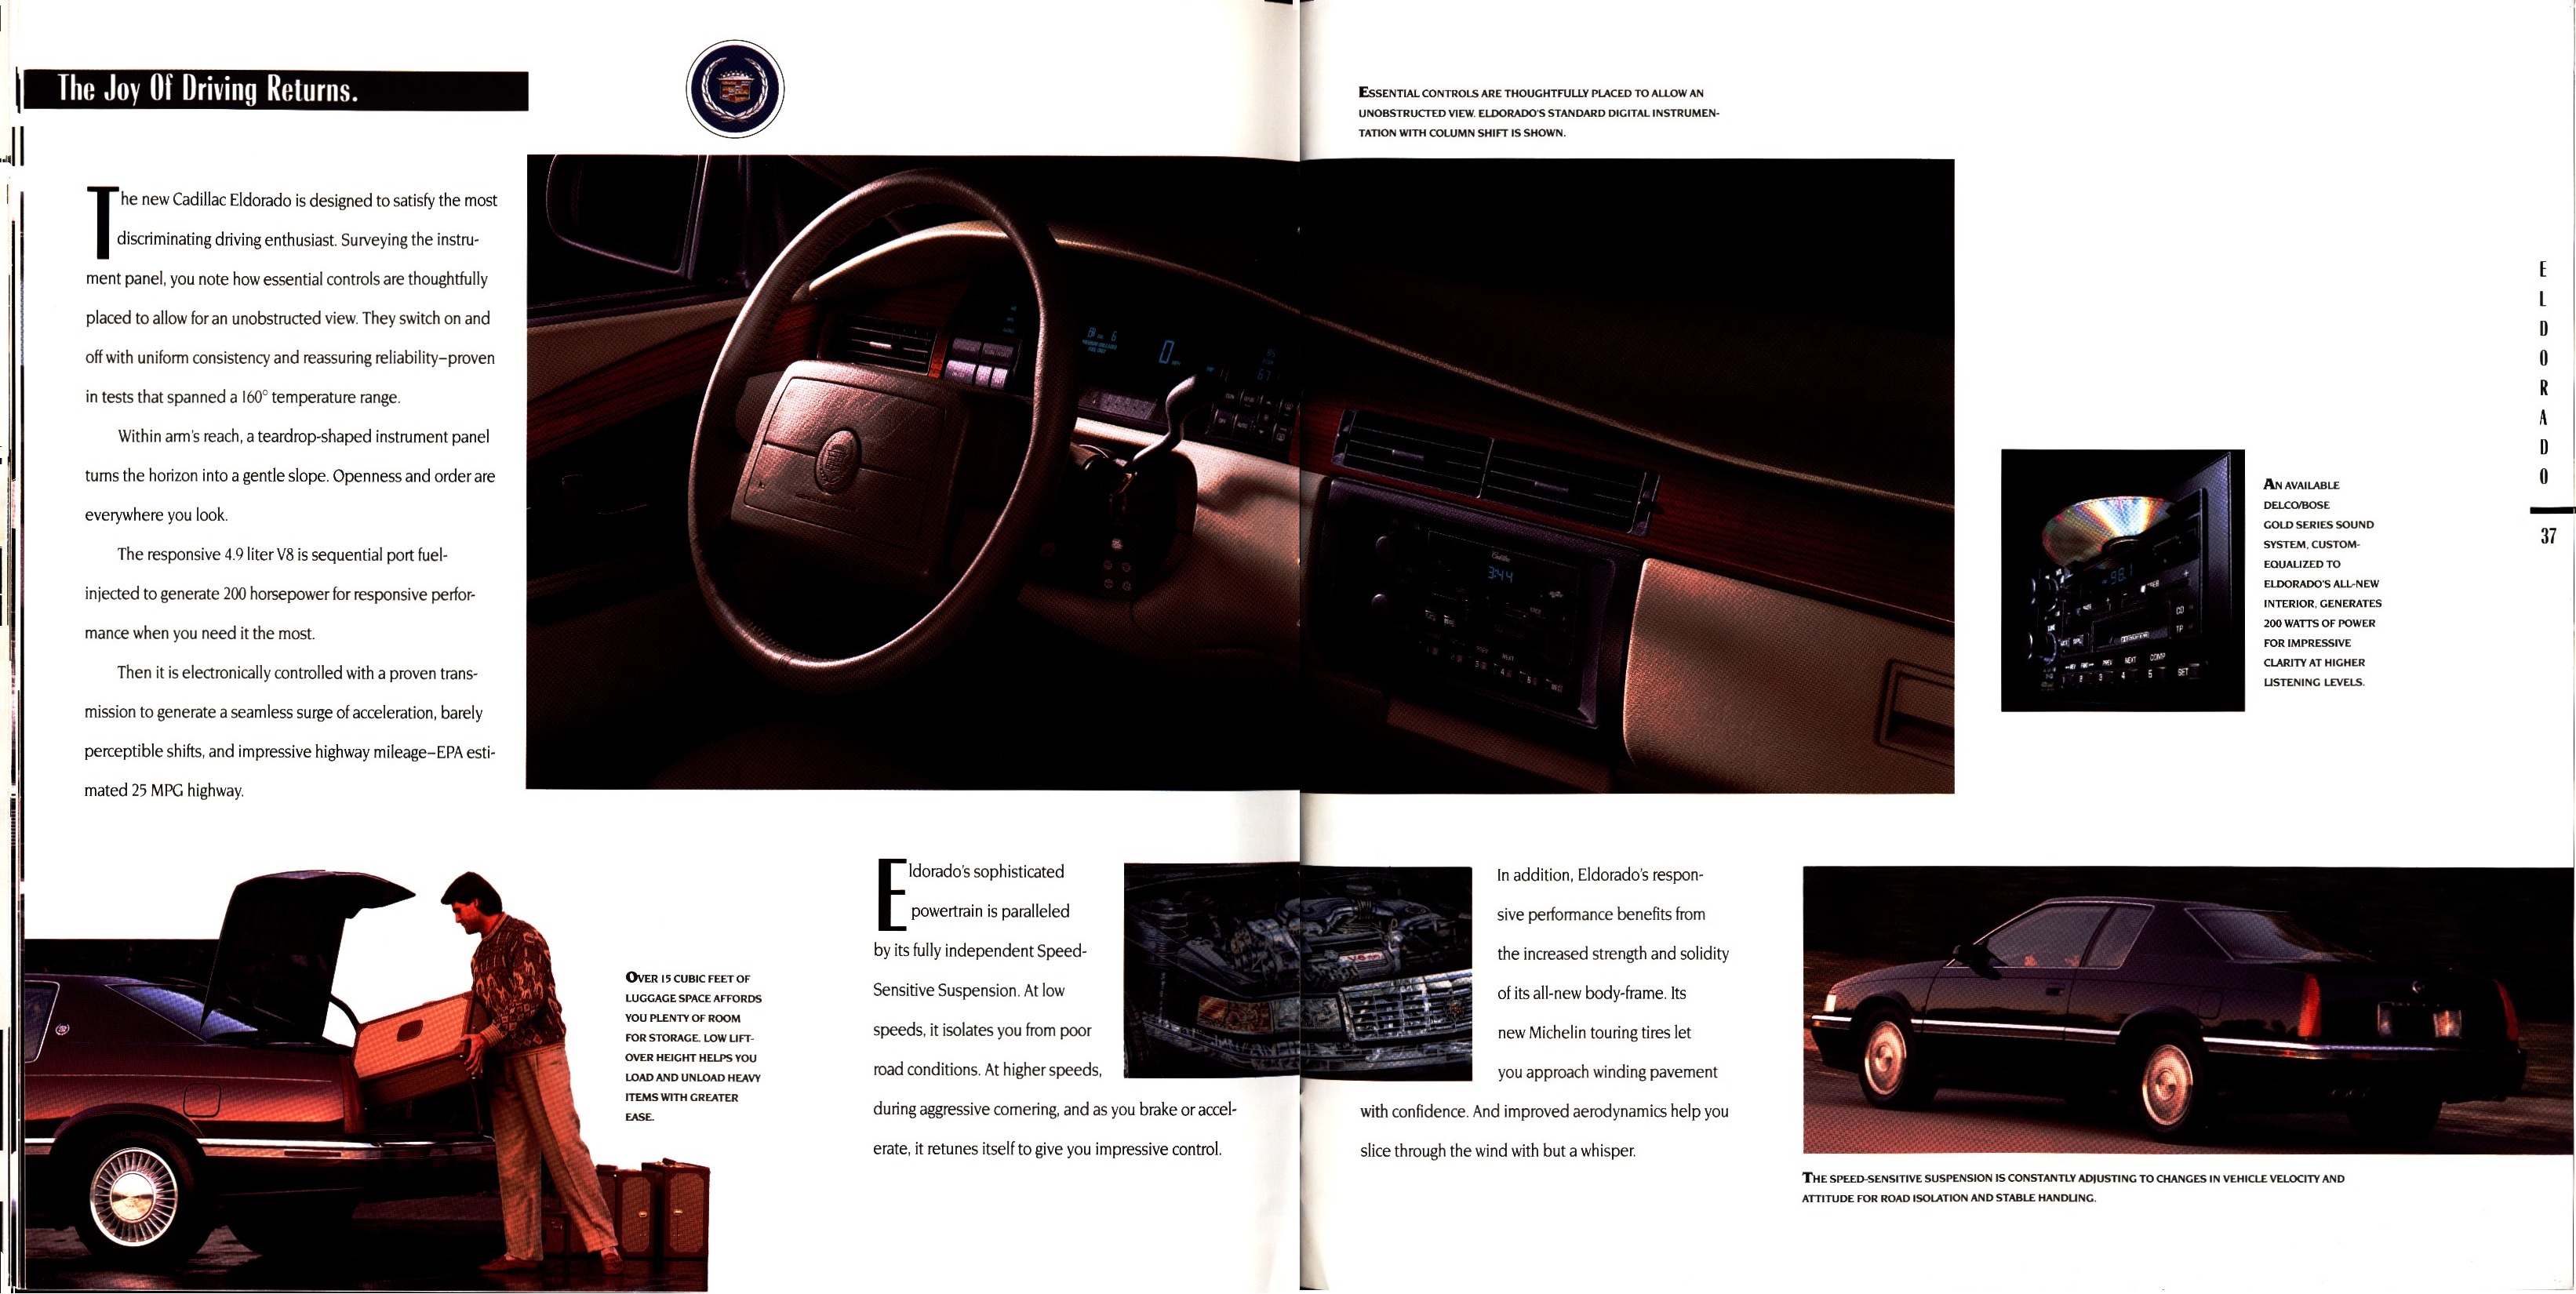 1992 Cadillac Full Line Prestige Brochure 36-37